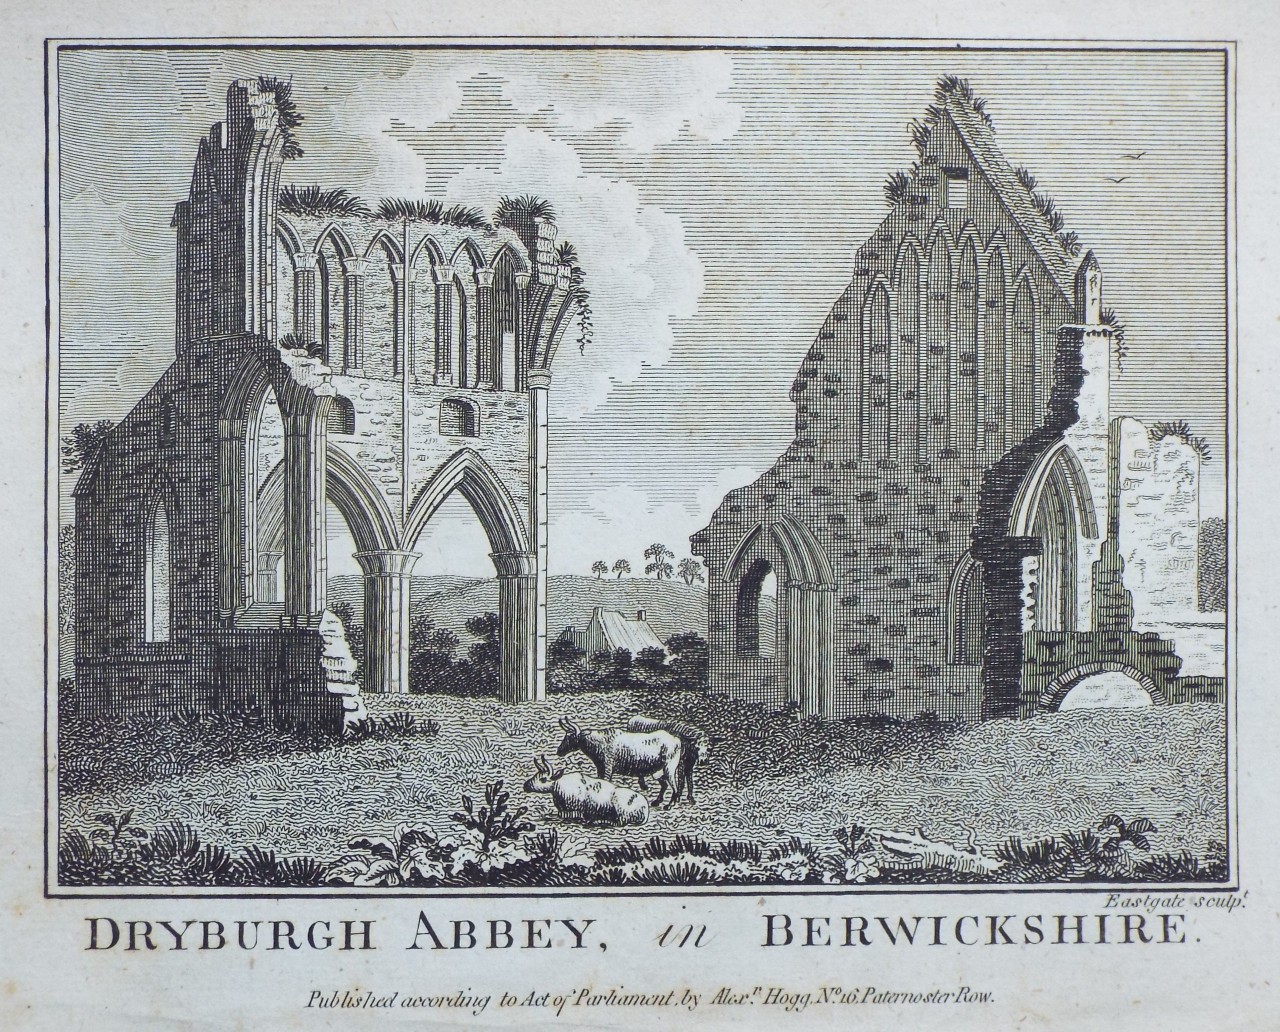 Print - Dryburgh Abbey, in Berwickshire. - 